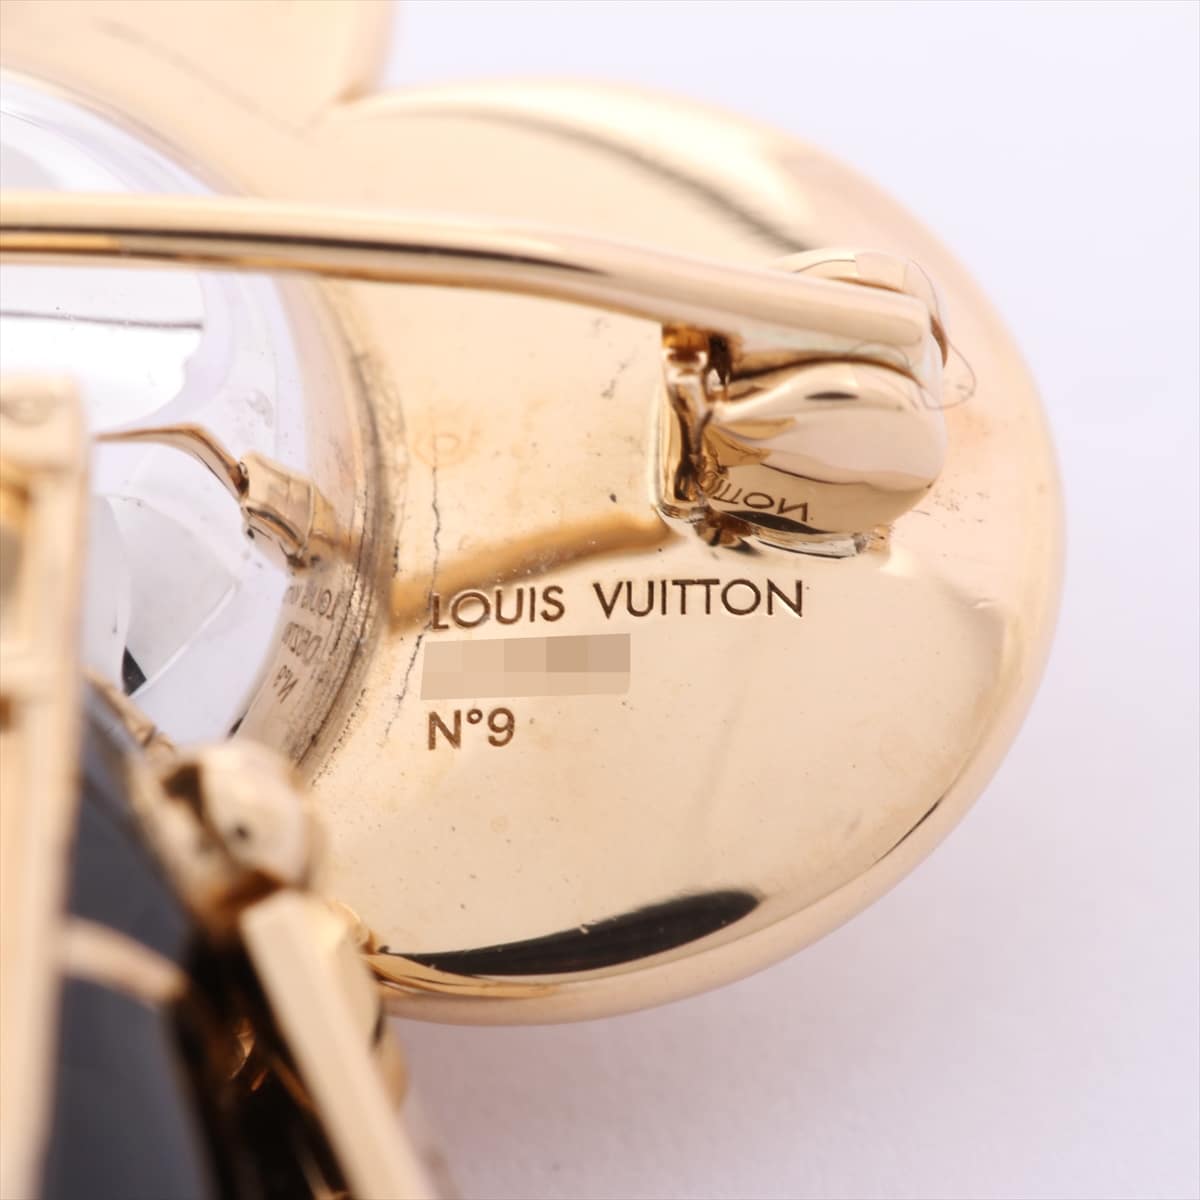 Louis Vuitton Pandantif Vivienne Shibuya diamond Necklace top 750 YG black lacquer 32.9g